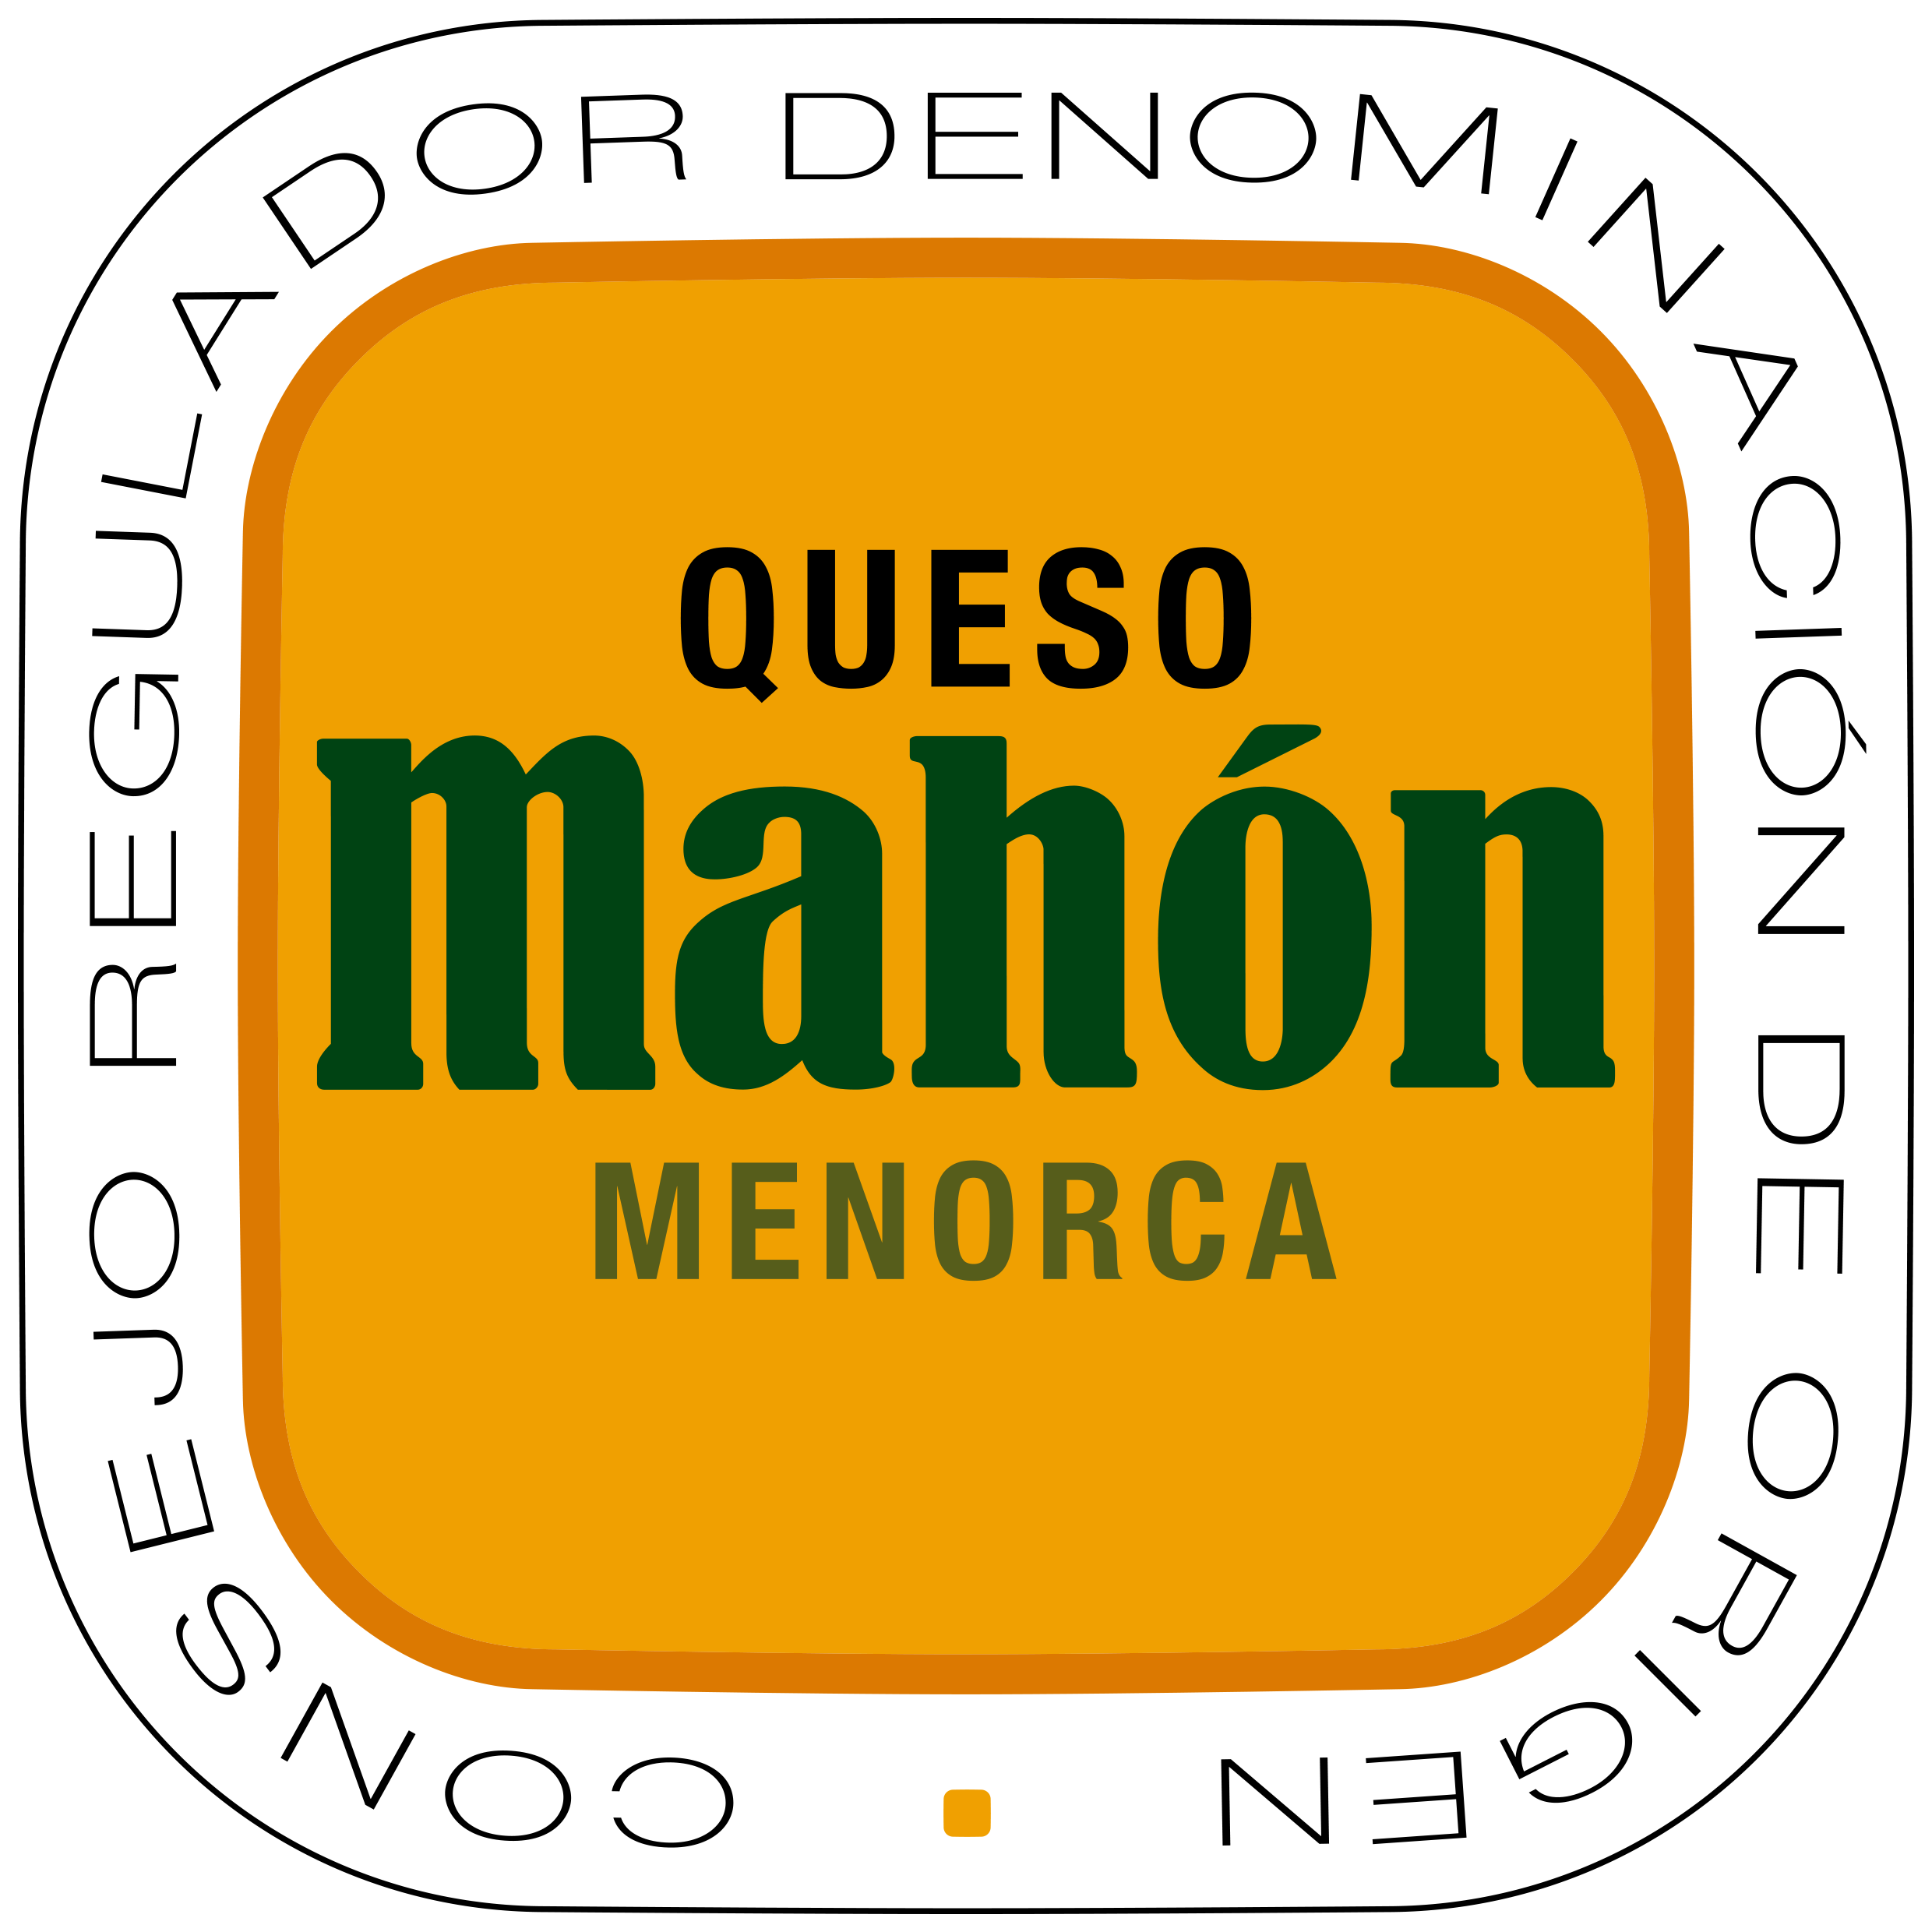 Formatge Mahón-Menorca - Illes Balears - Productes agroalimentaris, denominacions d'origen i gastronomia balear